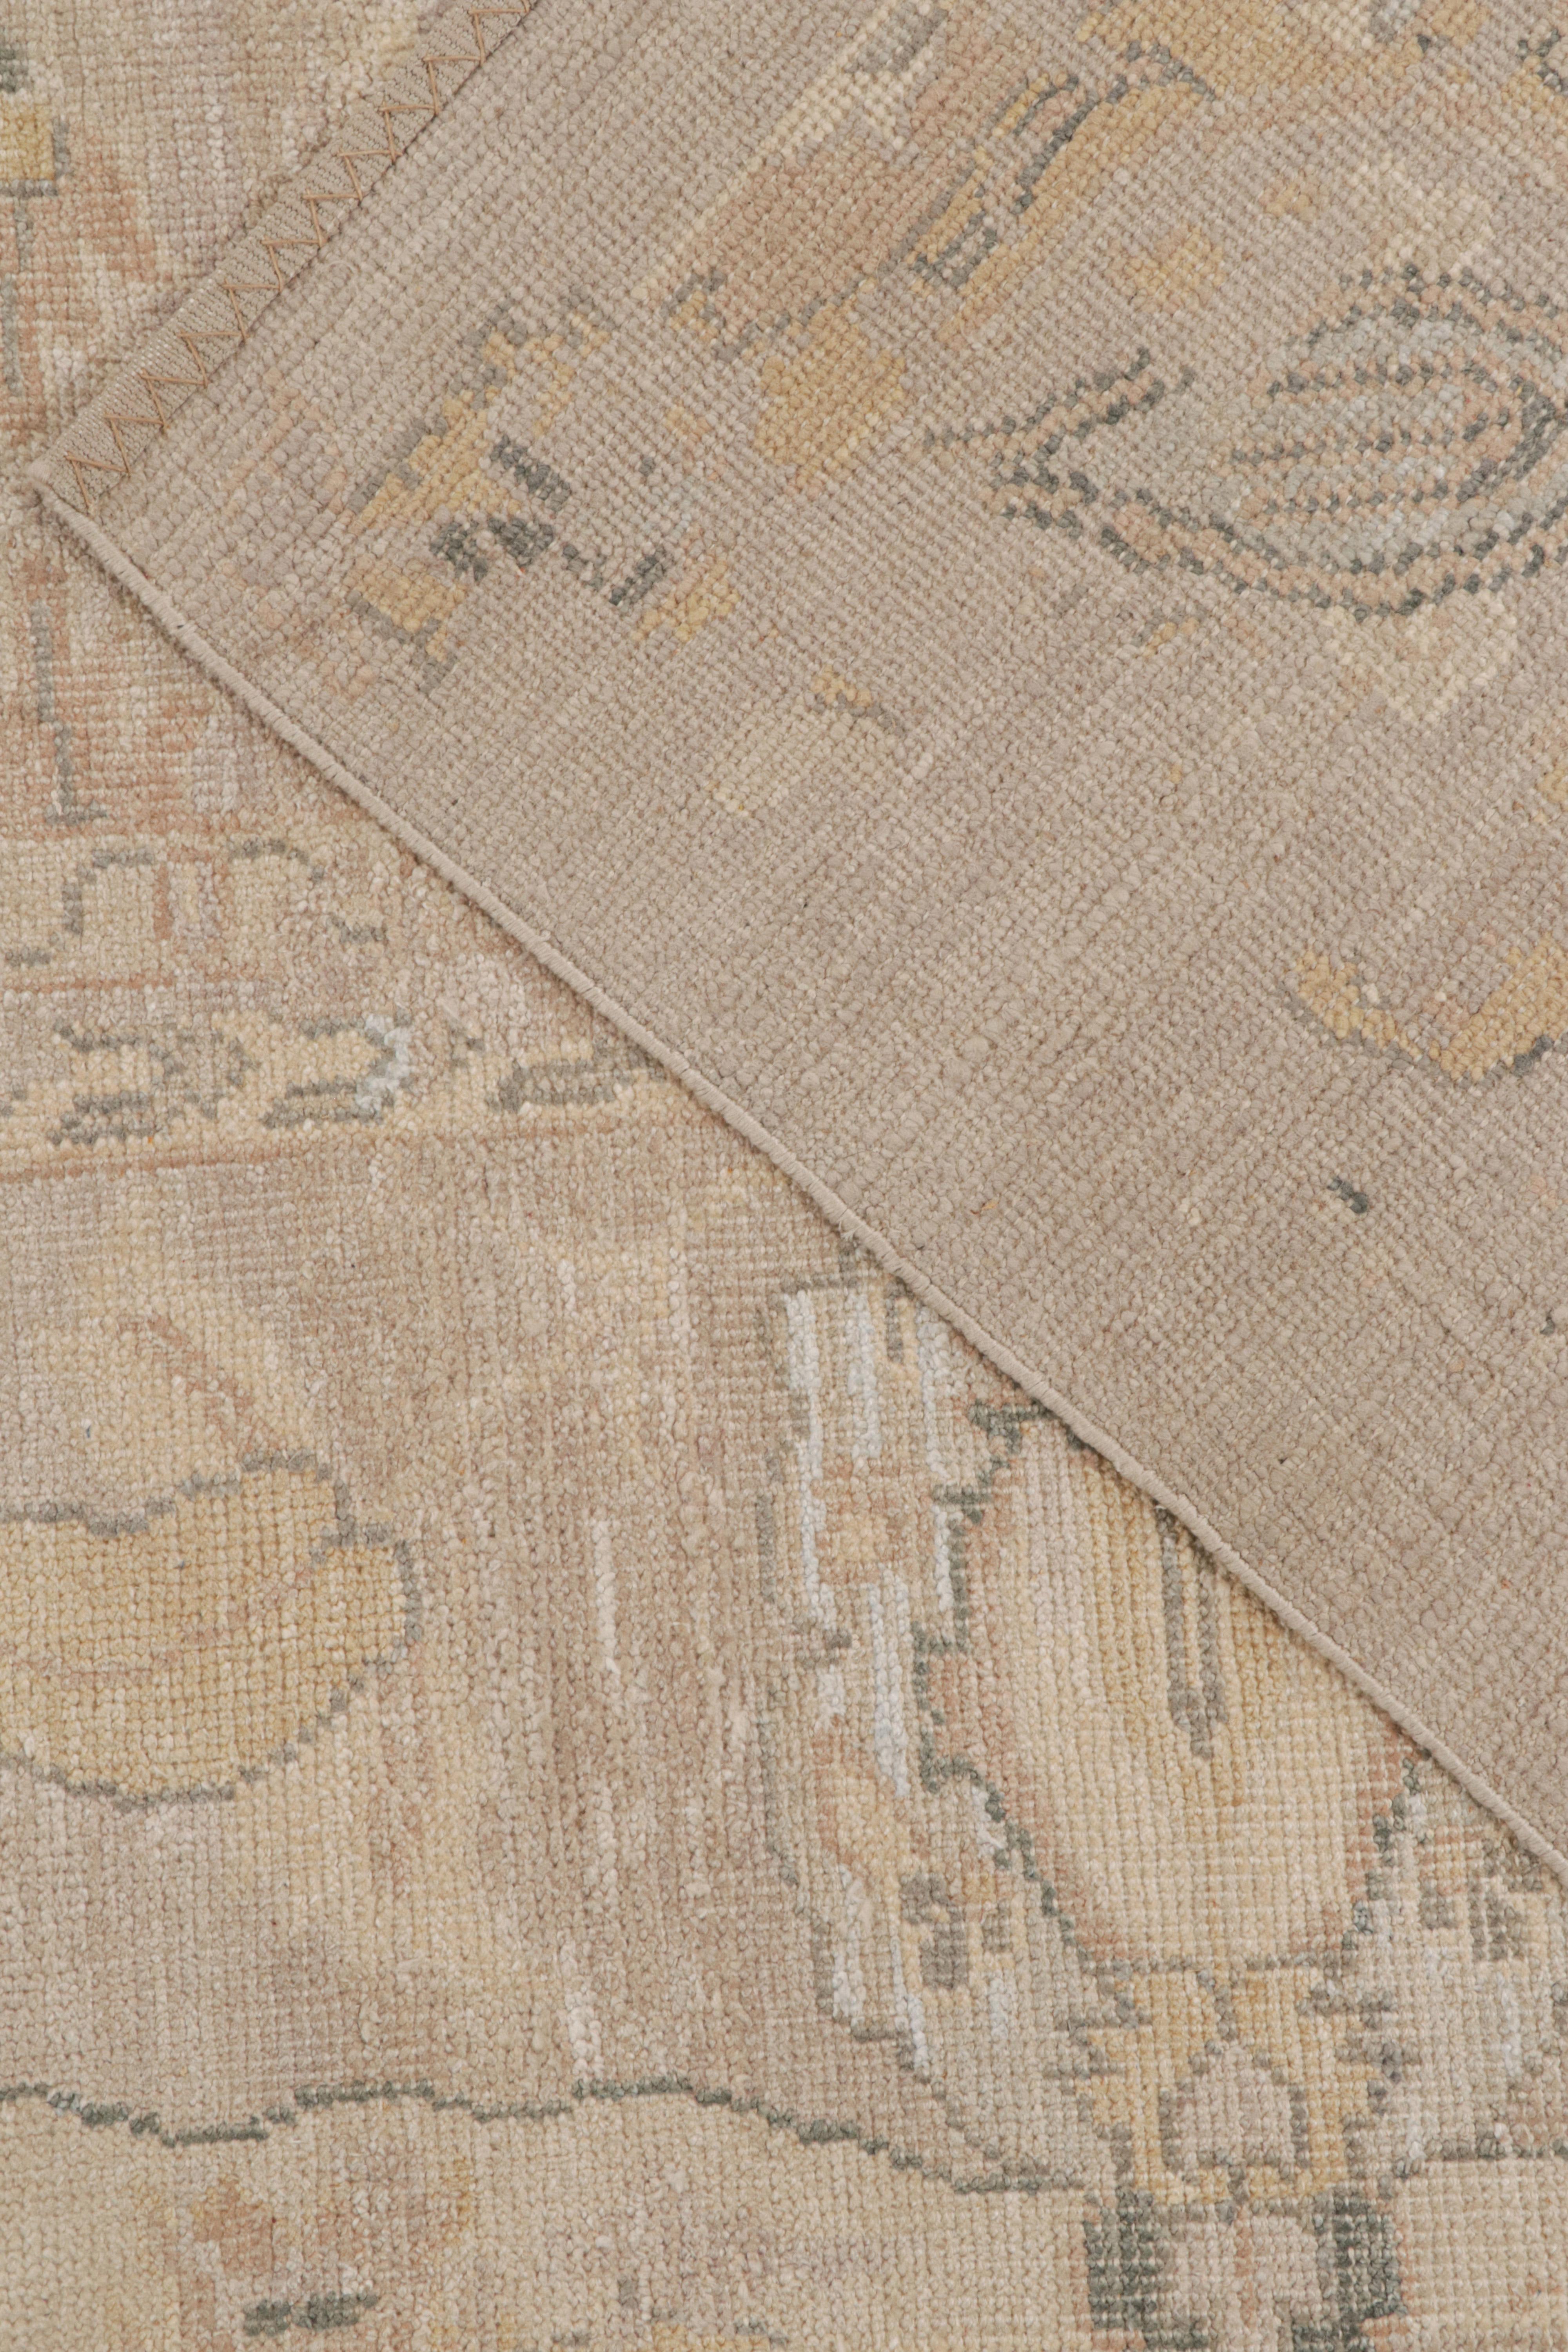 Rug & Kilim's Oushak Style Teppich in Beige, Grau & Gold Geometrisch gemustert (Seide) im Angebot